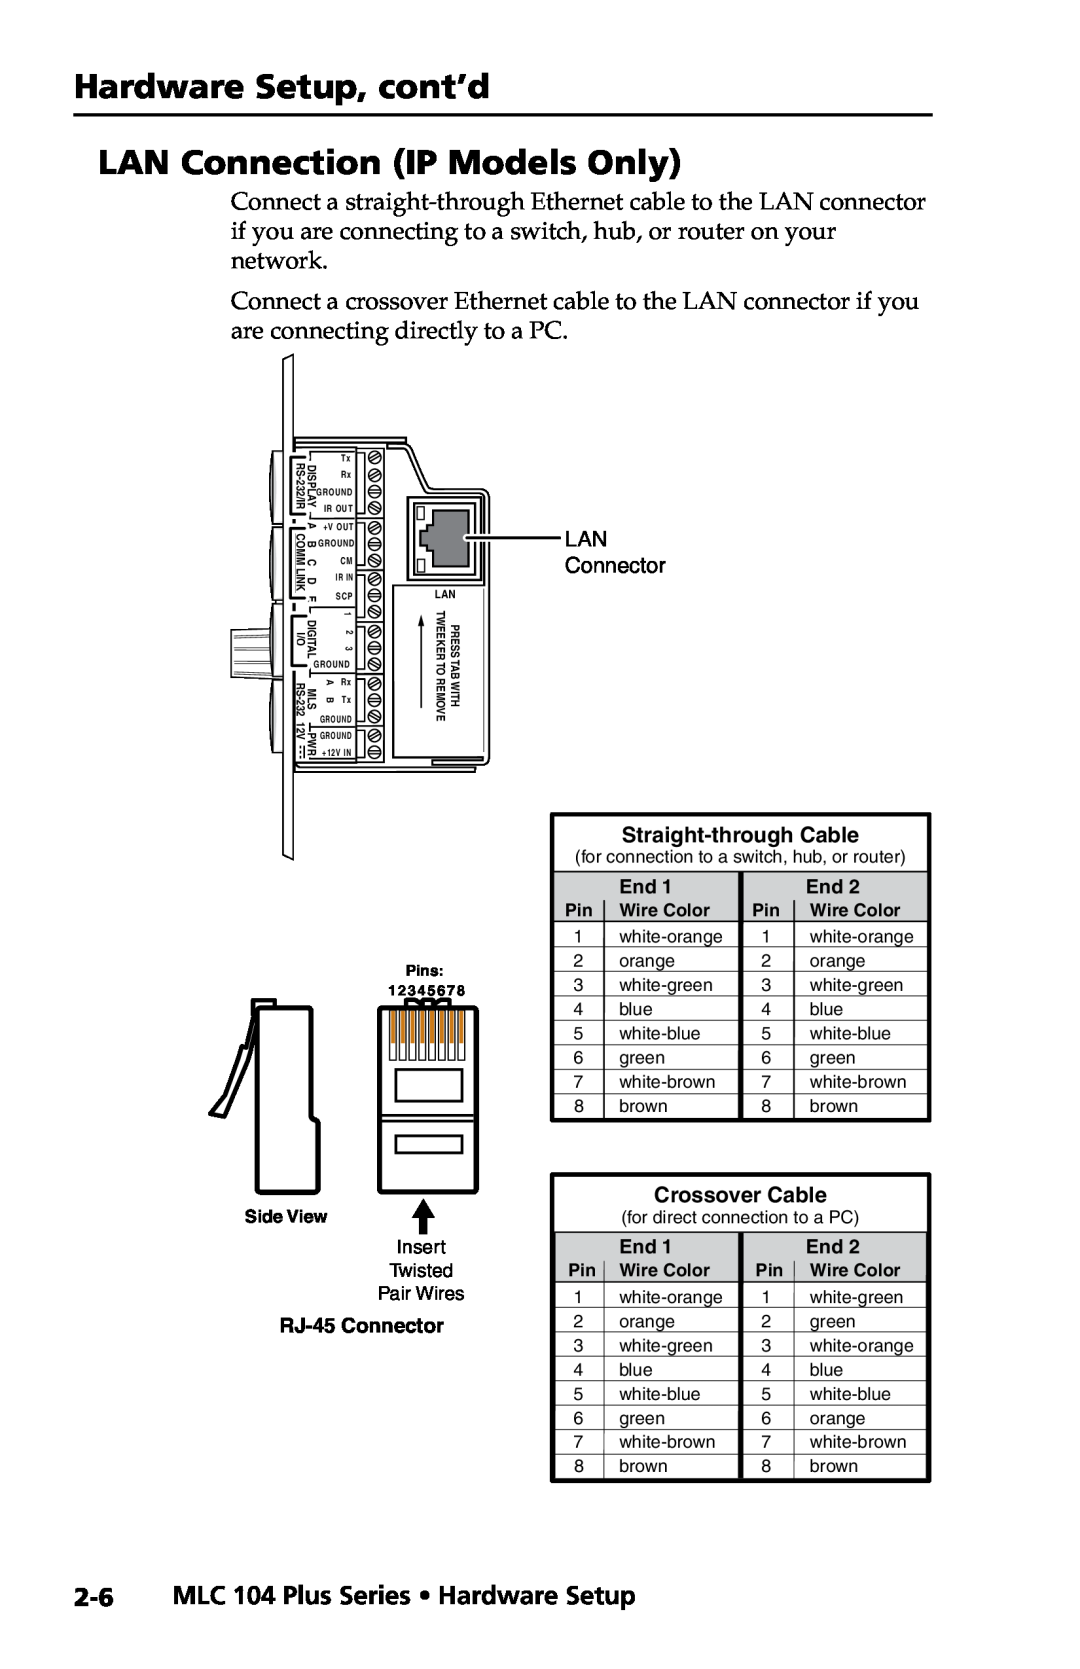 Extron electronic MLC 104 Plus Series setup guide Hardware Setup, cont’d LAN Connection IP Models Only 